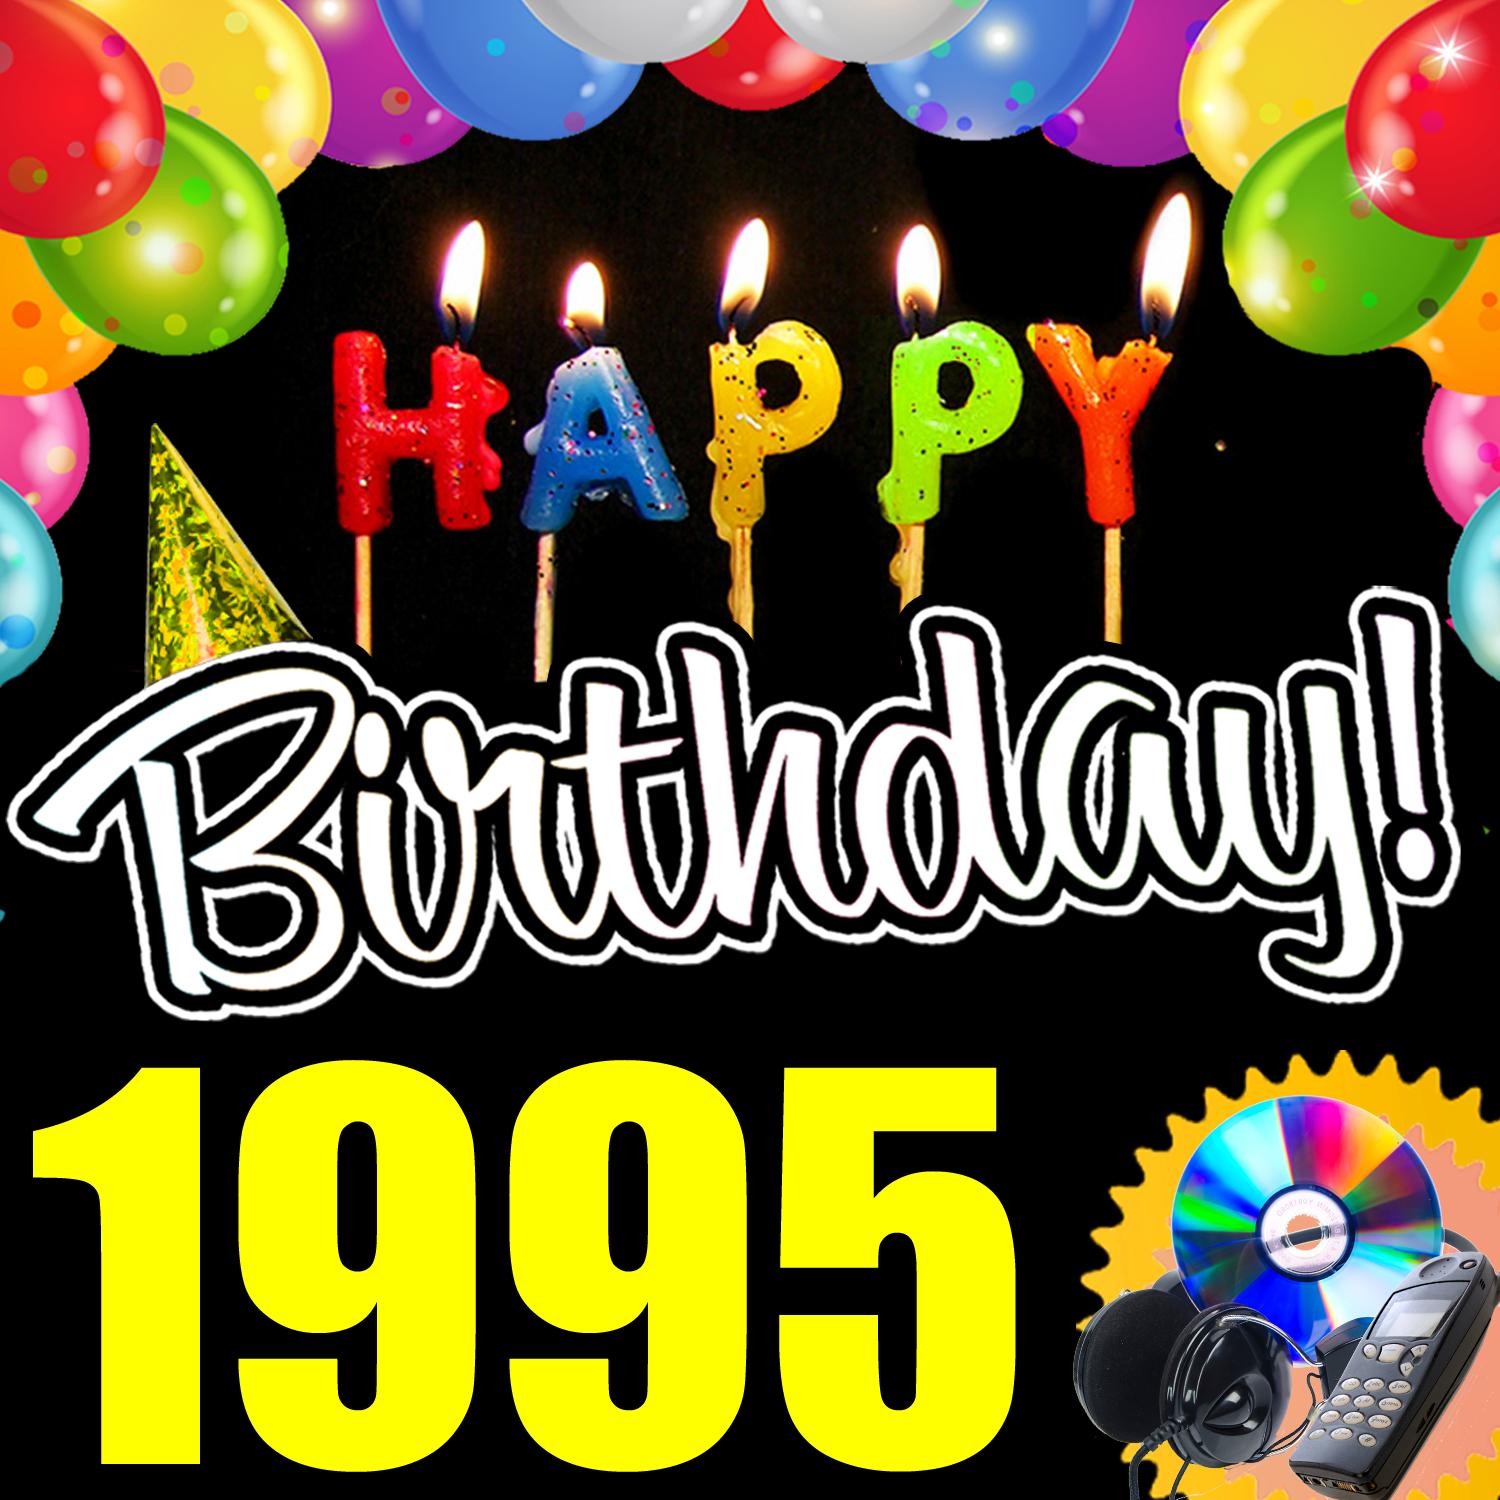 Happy Birthday 1995